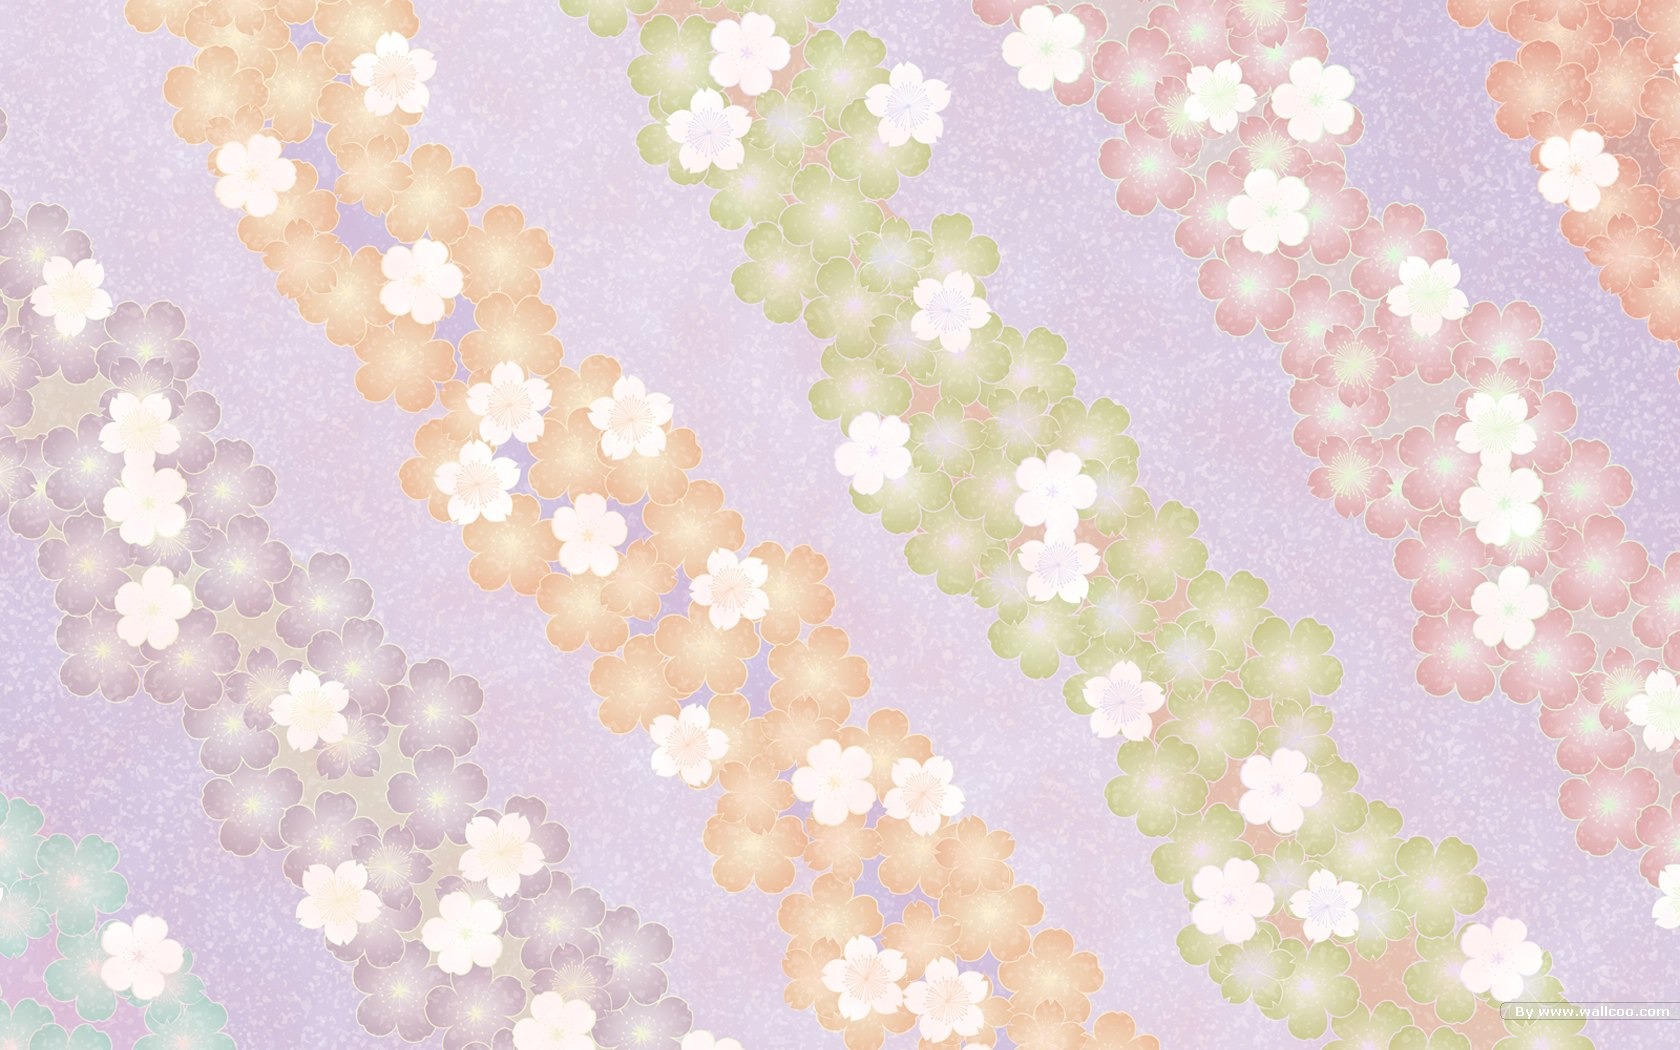 Japan-Stil Tapete Muster und Farbe #10 - 1680x1050